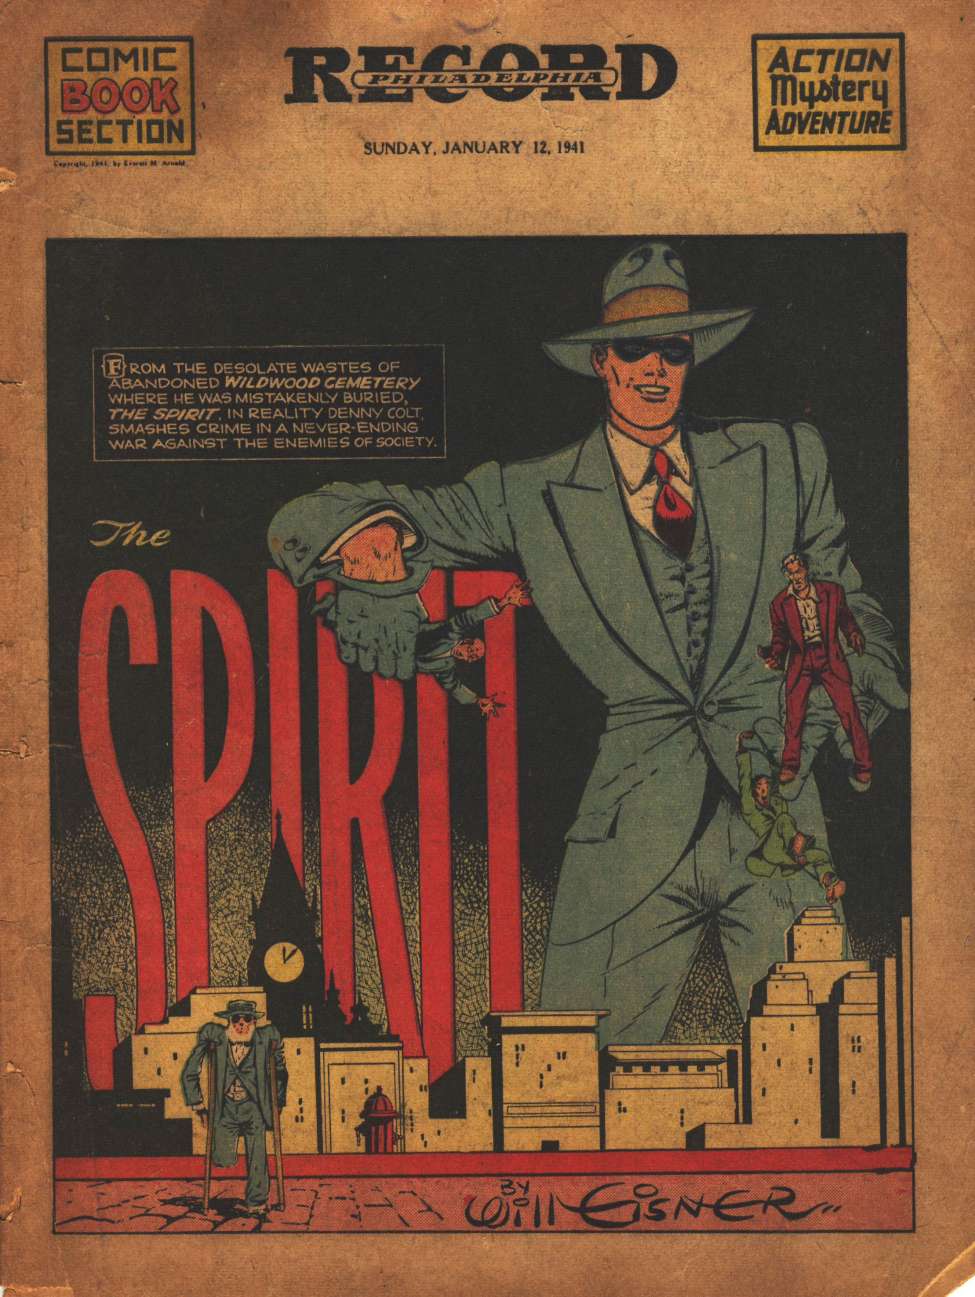 Comic Book Cover For The Spirit (1941-01-12) - Philadelphia Record